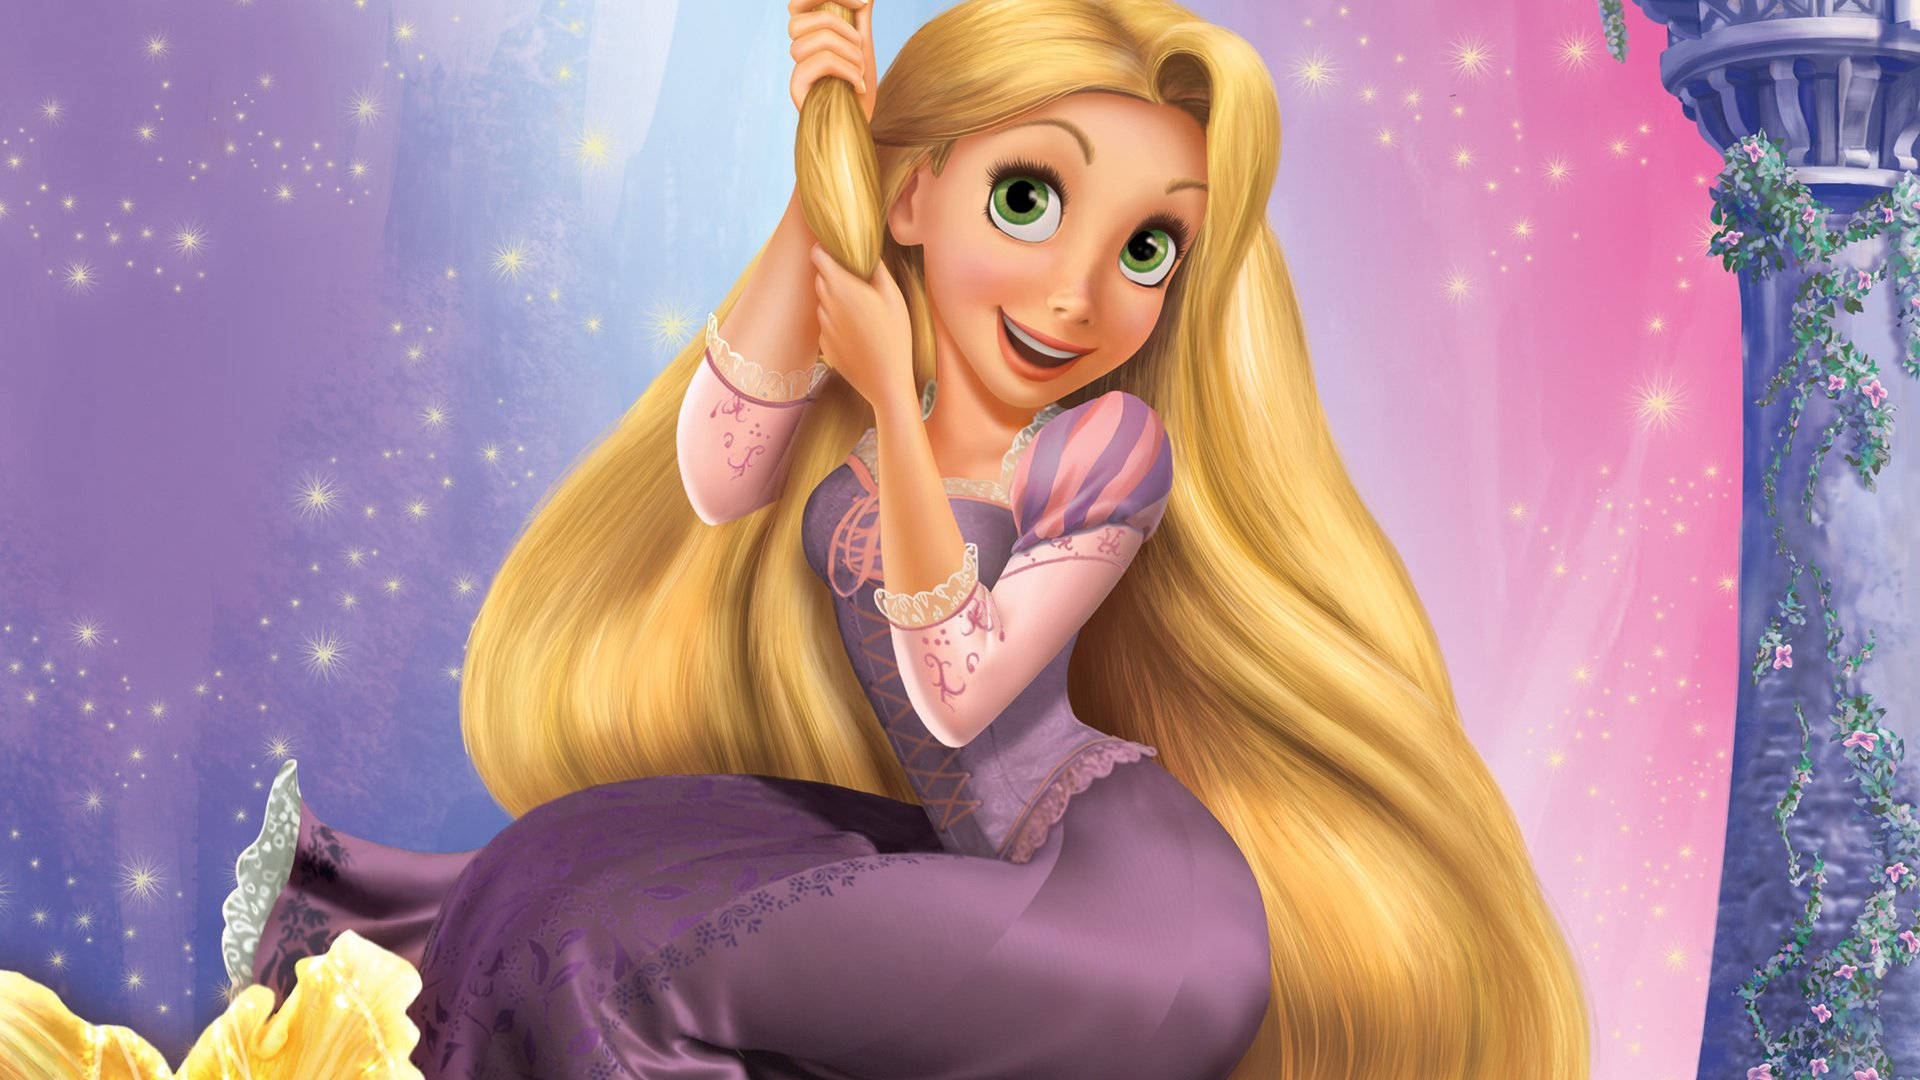 Free Rapunzel Wallpaper Downloads, [100+] Rapunzel Wallpapers for FREE |  